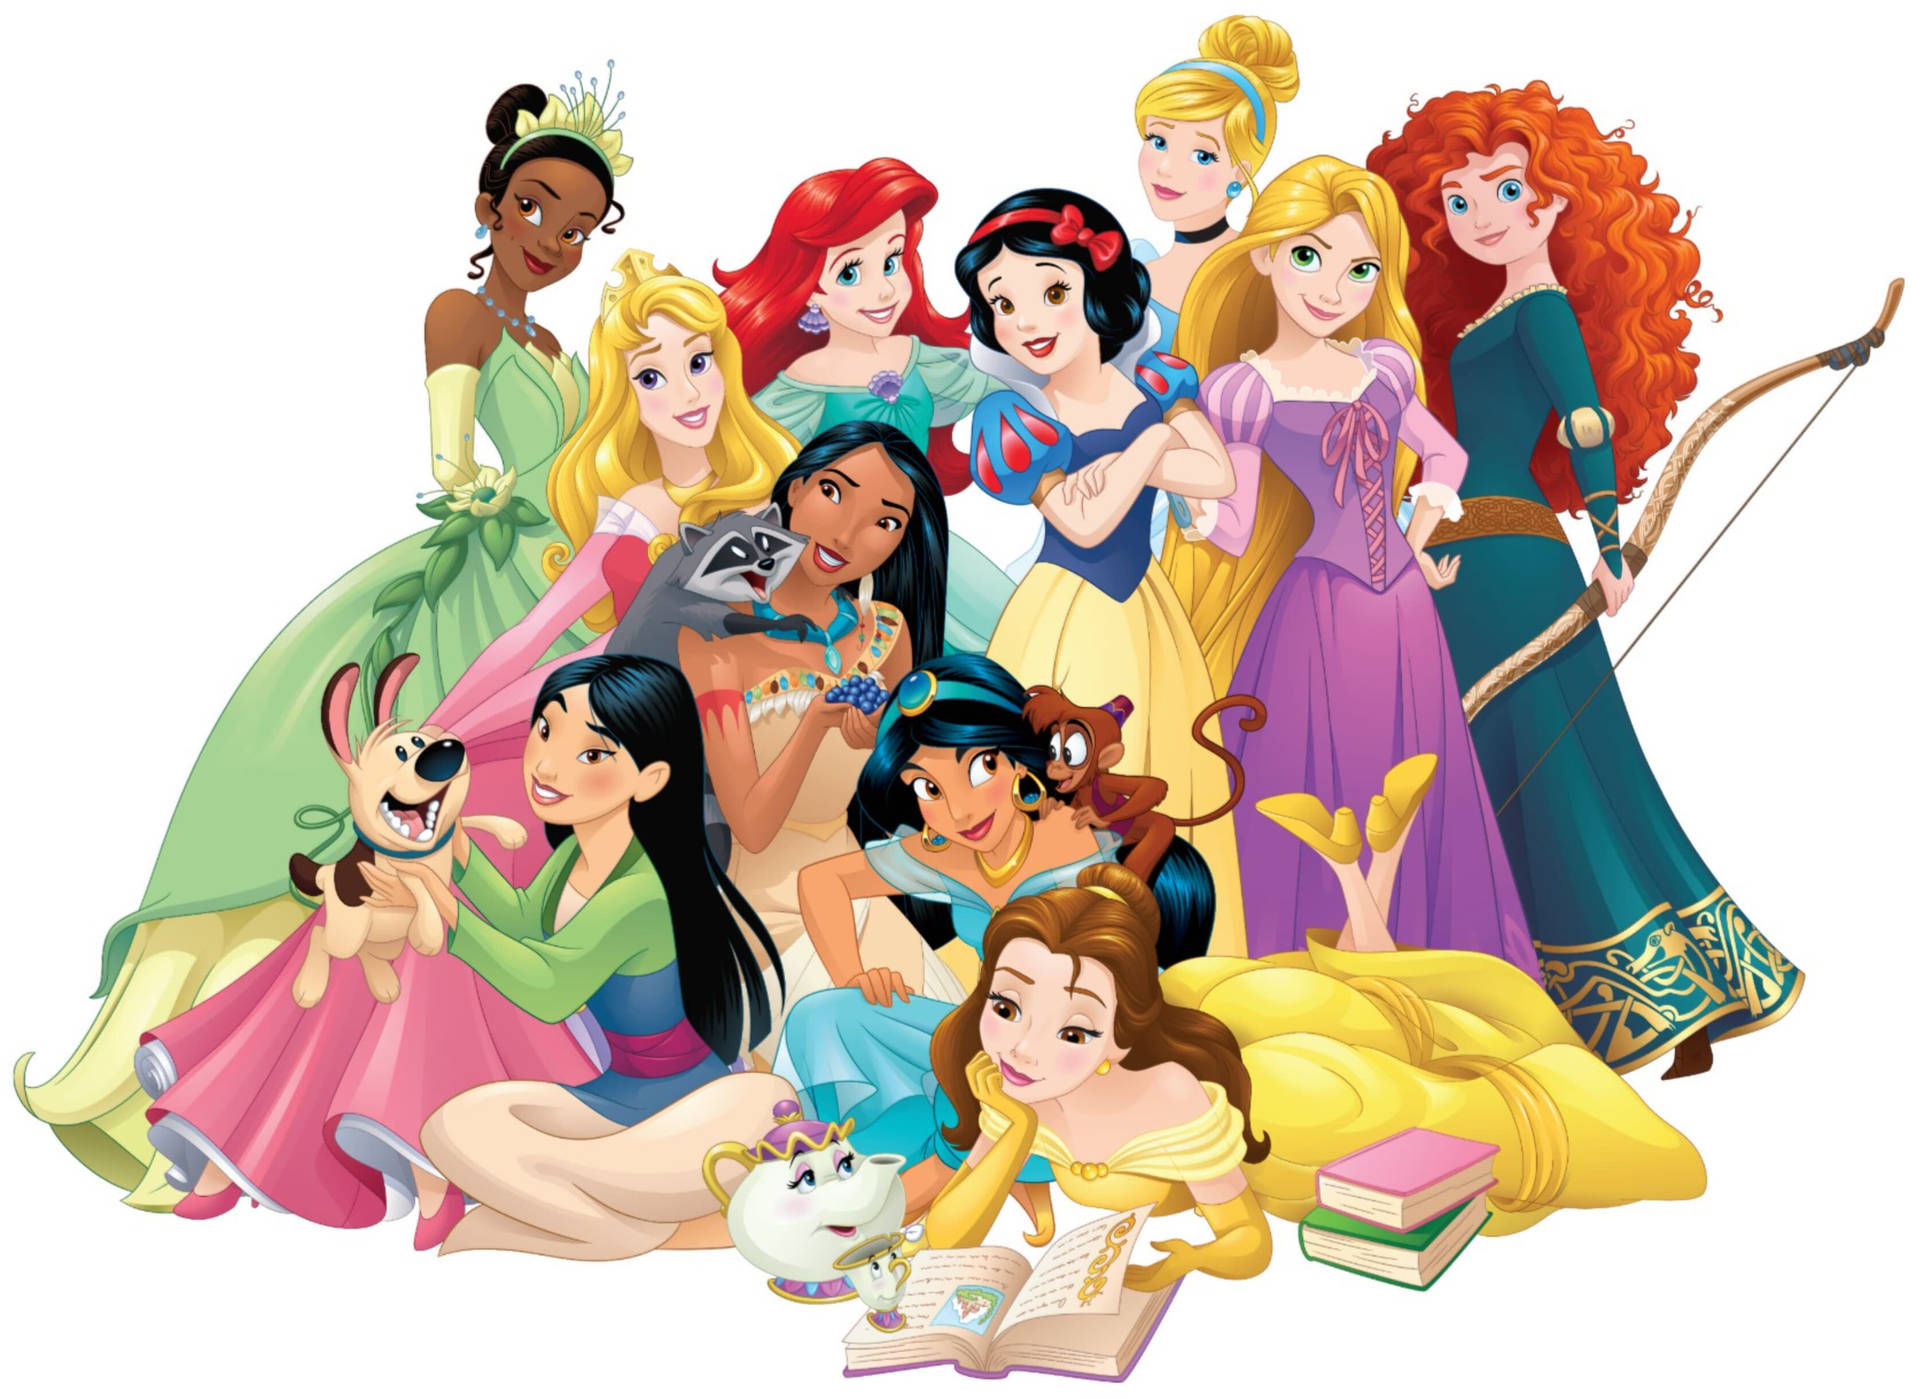 Disney Princess 3347X2438 Wallpaper and Background Image